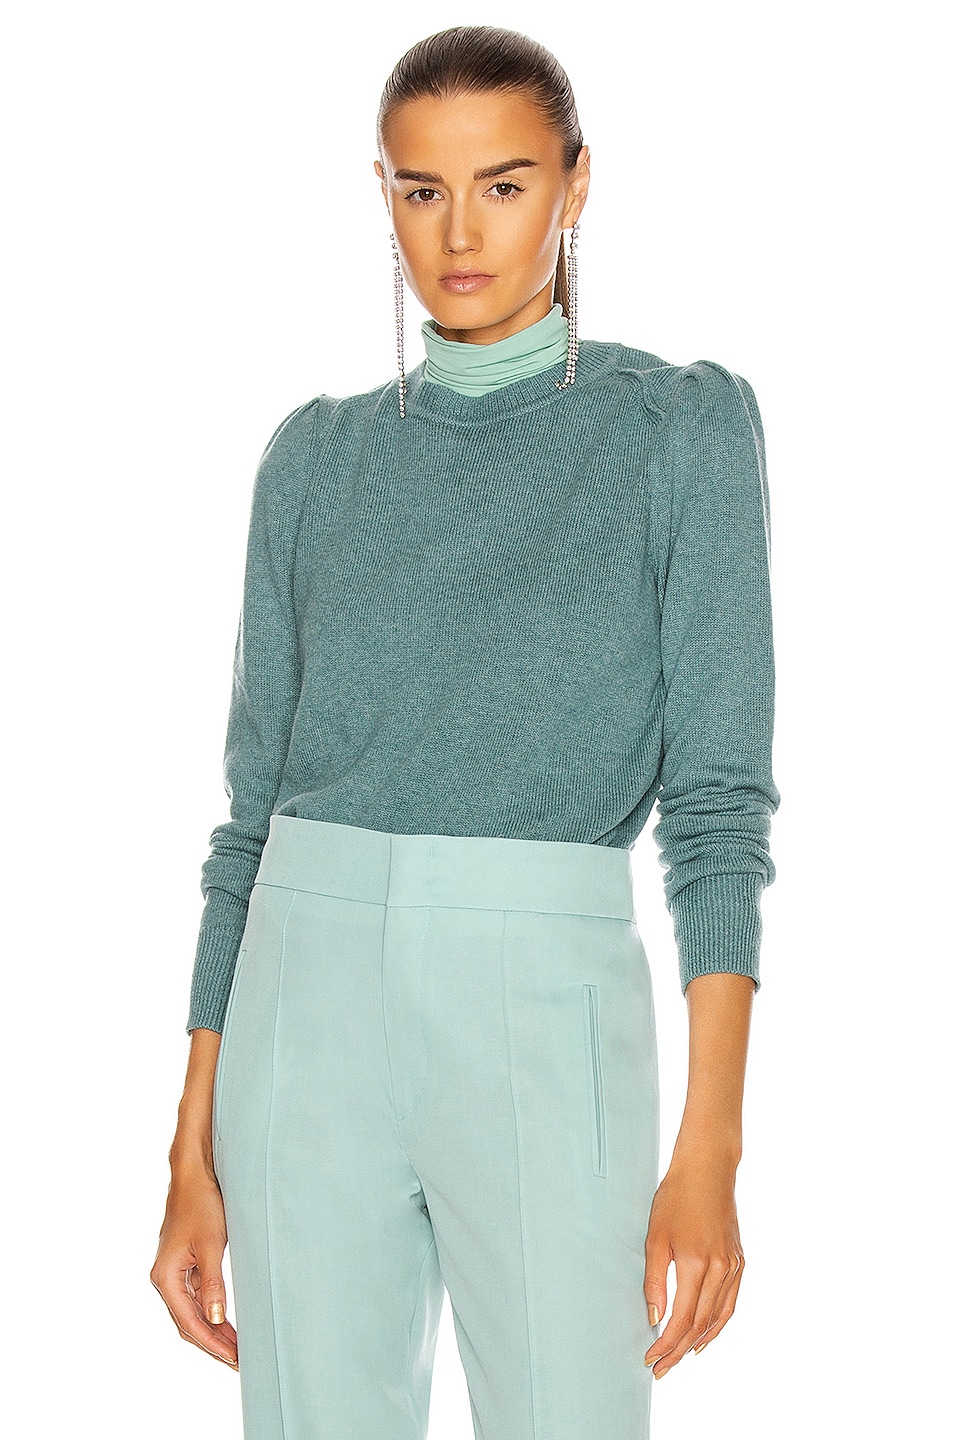 Isabel Marant Etoile Kleely Sweater in Greyish Blue | FWRD